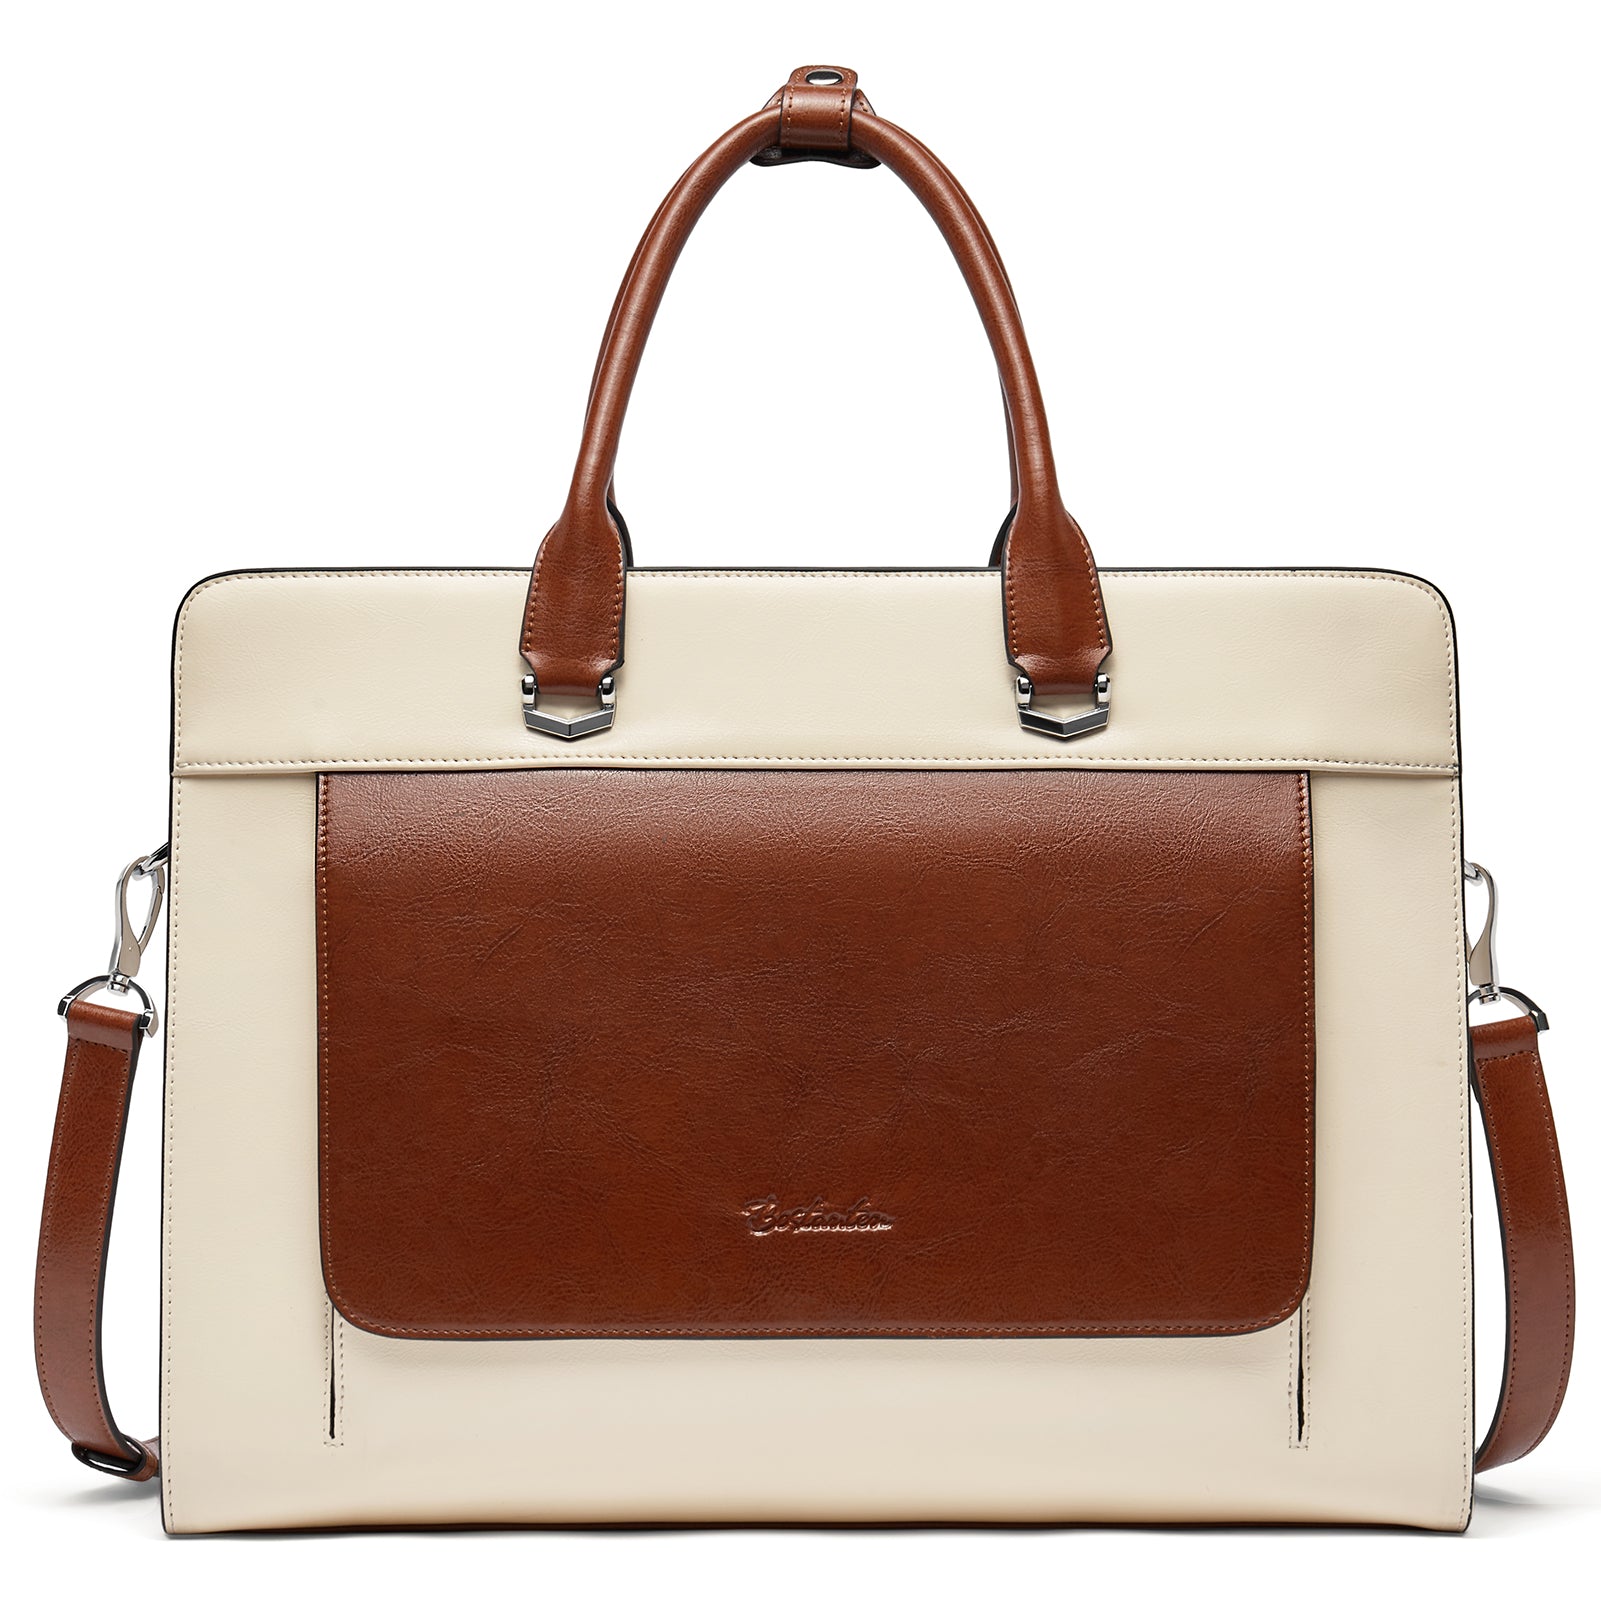 BOSTANTEN Briefcase for Women Leather Laptop Handbag 15.6 Inch Computer Bag Shoulder Work Tote Stylish 